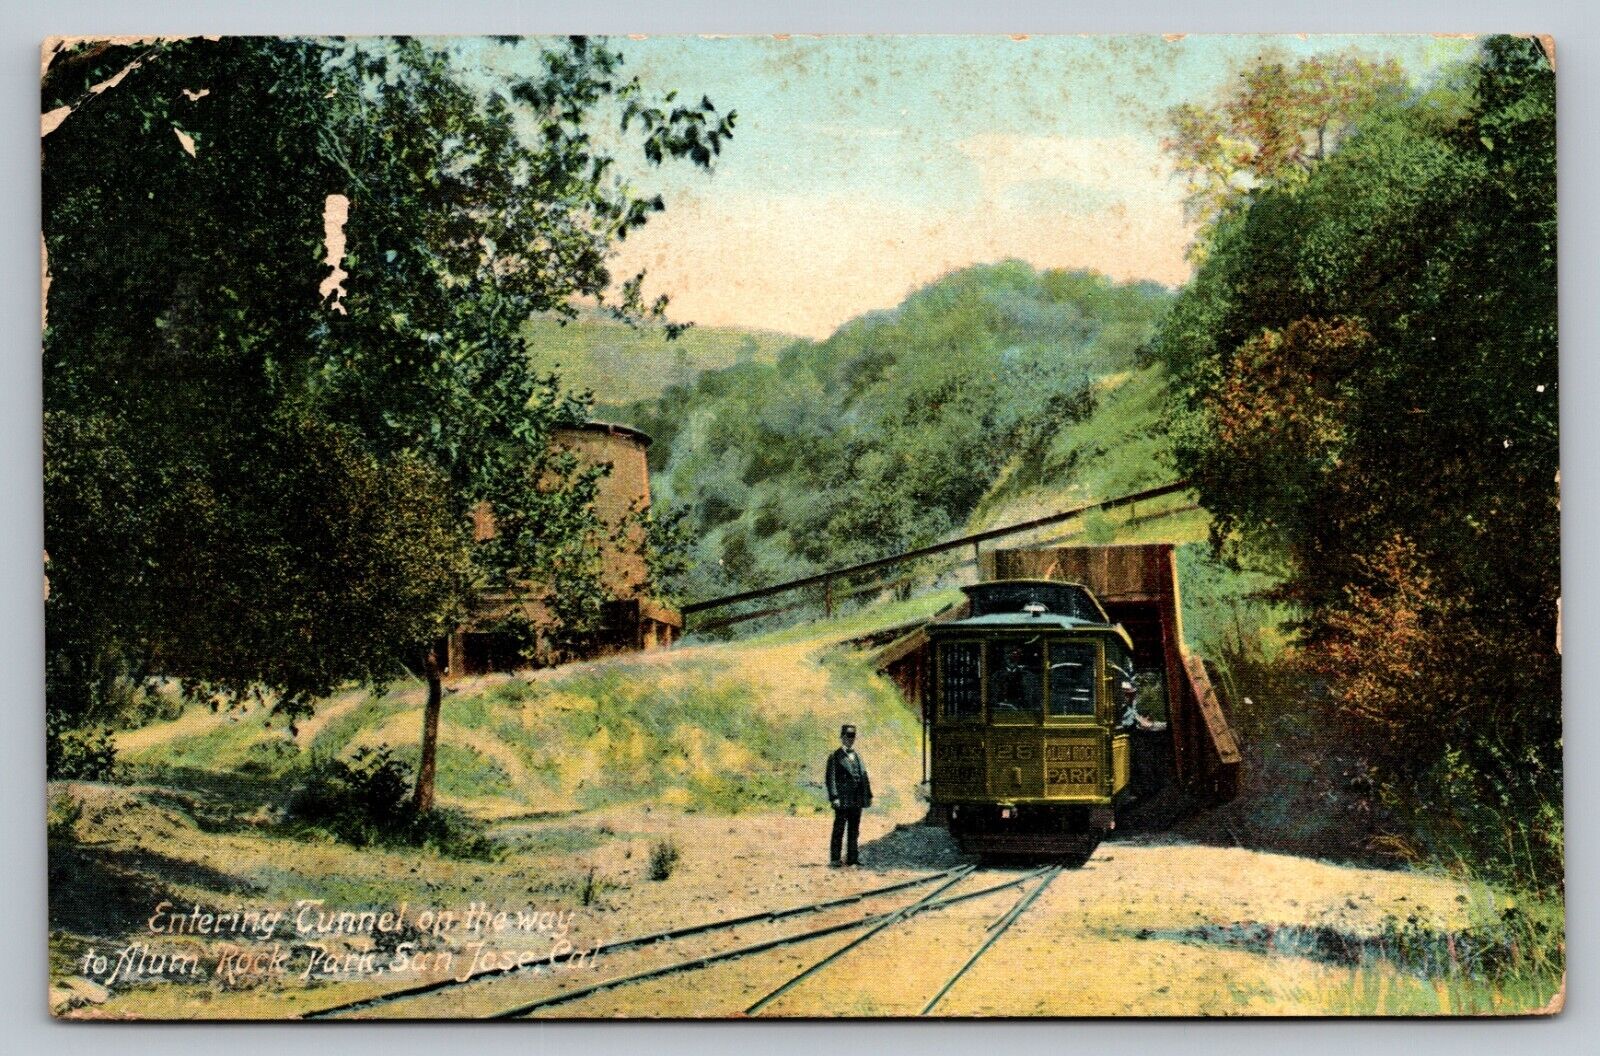 Entering Tunnel on the way to Alum Rock Park San Jose CA Vintage Postcard